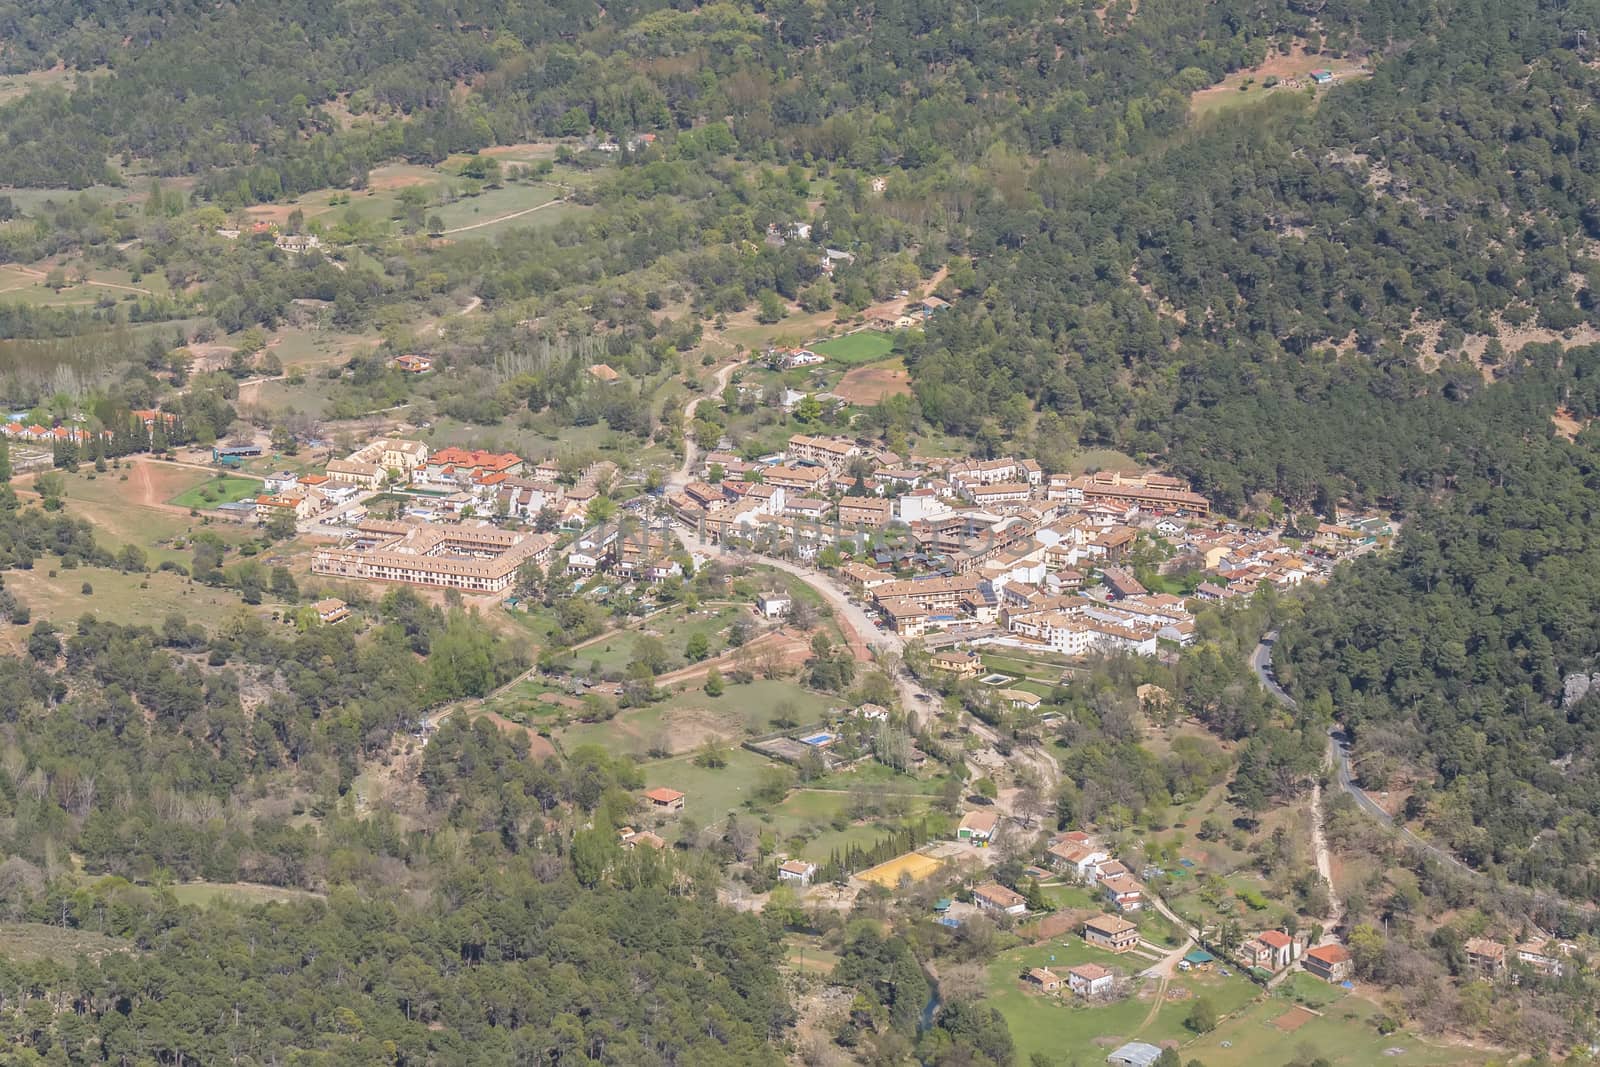 Arroyo Frio town in Sierra de Cazrola, Jaen, Spain by max8xam